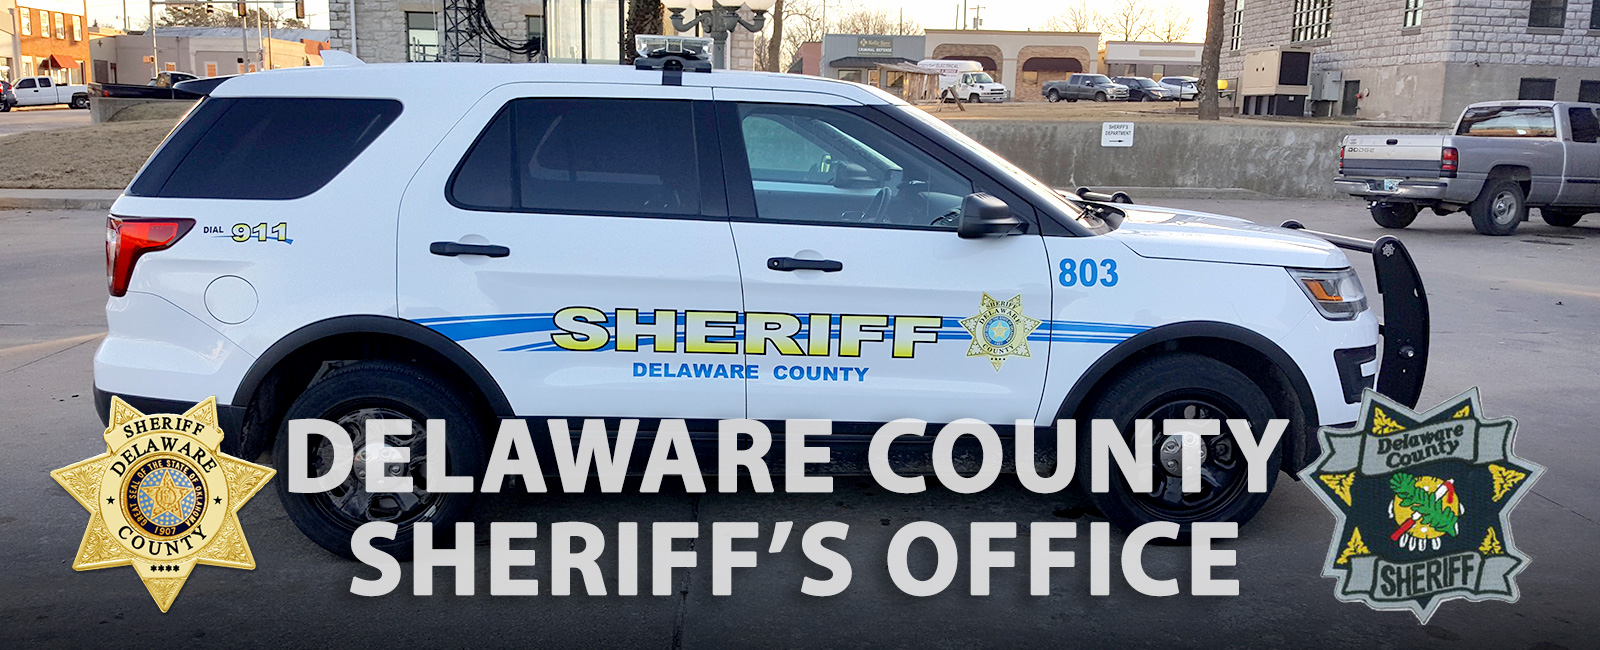 Delaware County Sheriff's Office